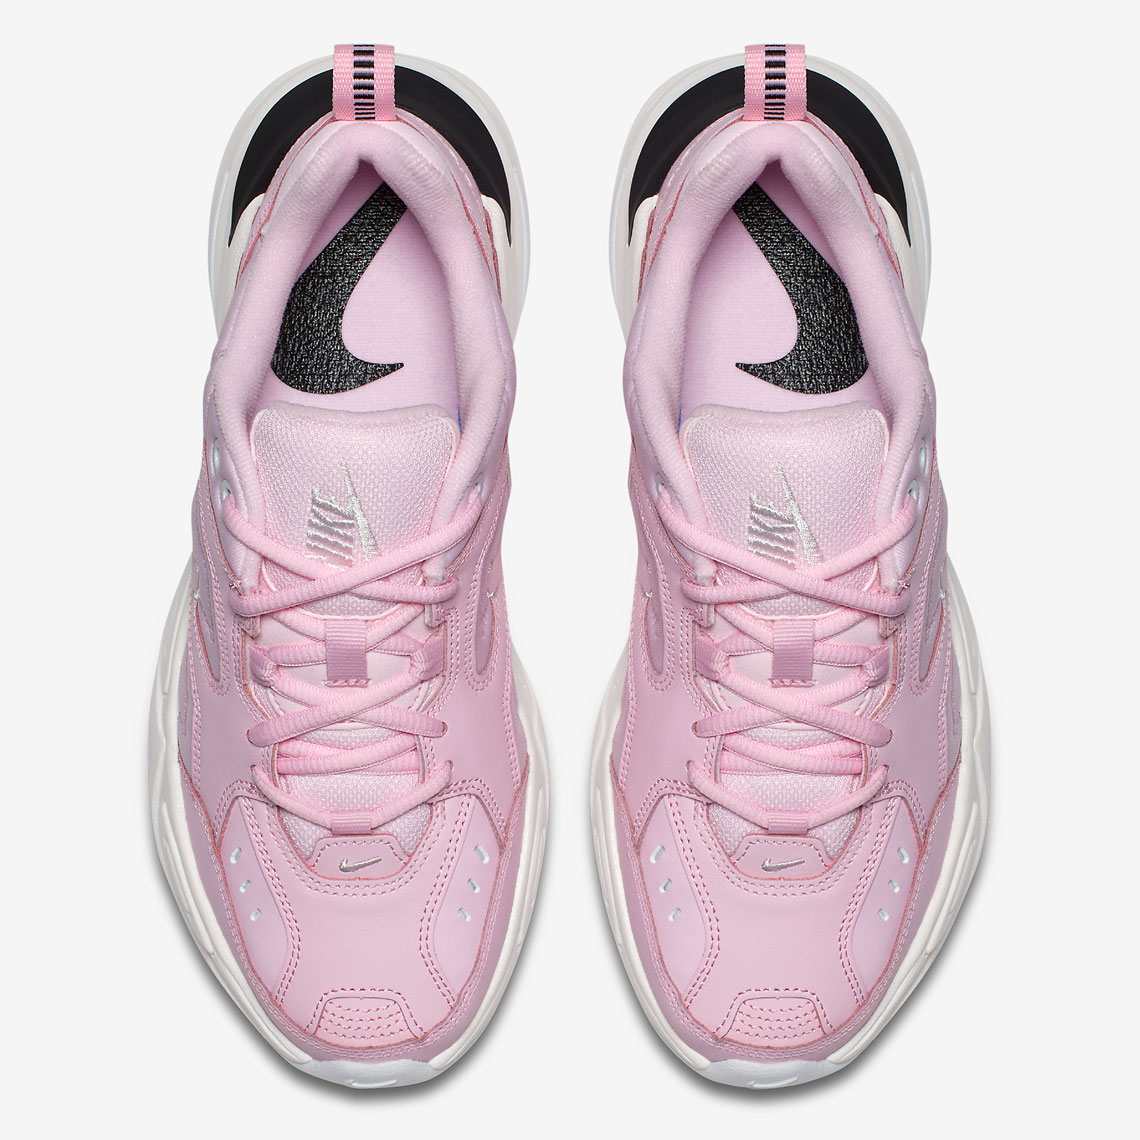 Cuna Más temprano Orgullo Nike M2K Tekno Pink Release Info | SneakerNews.com